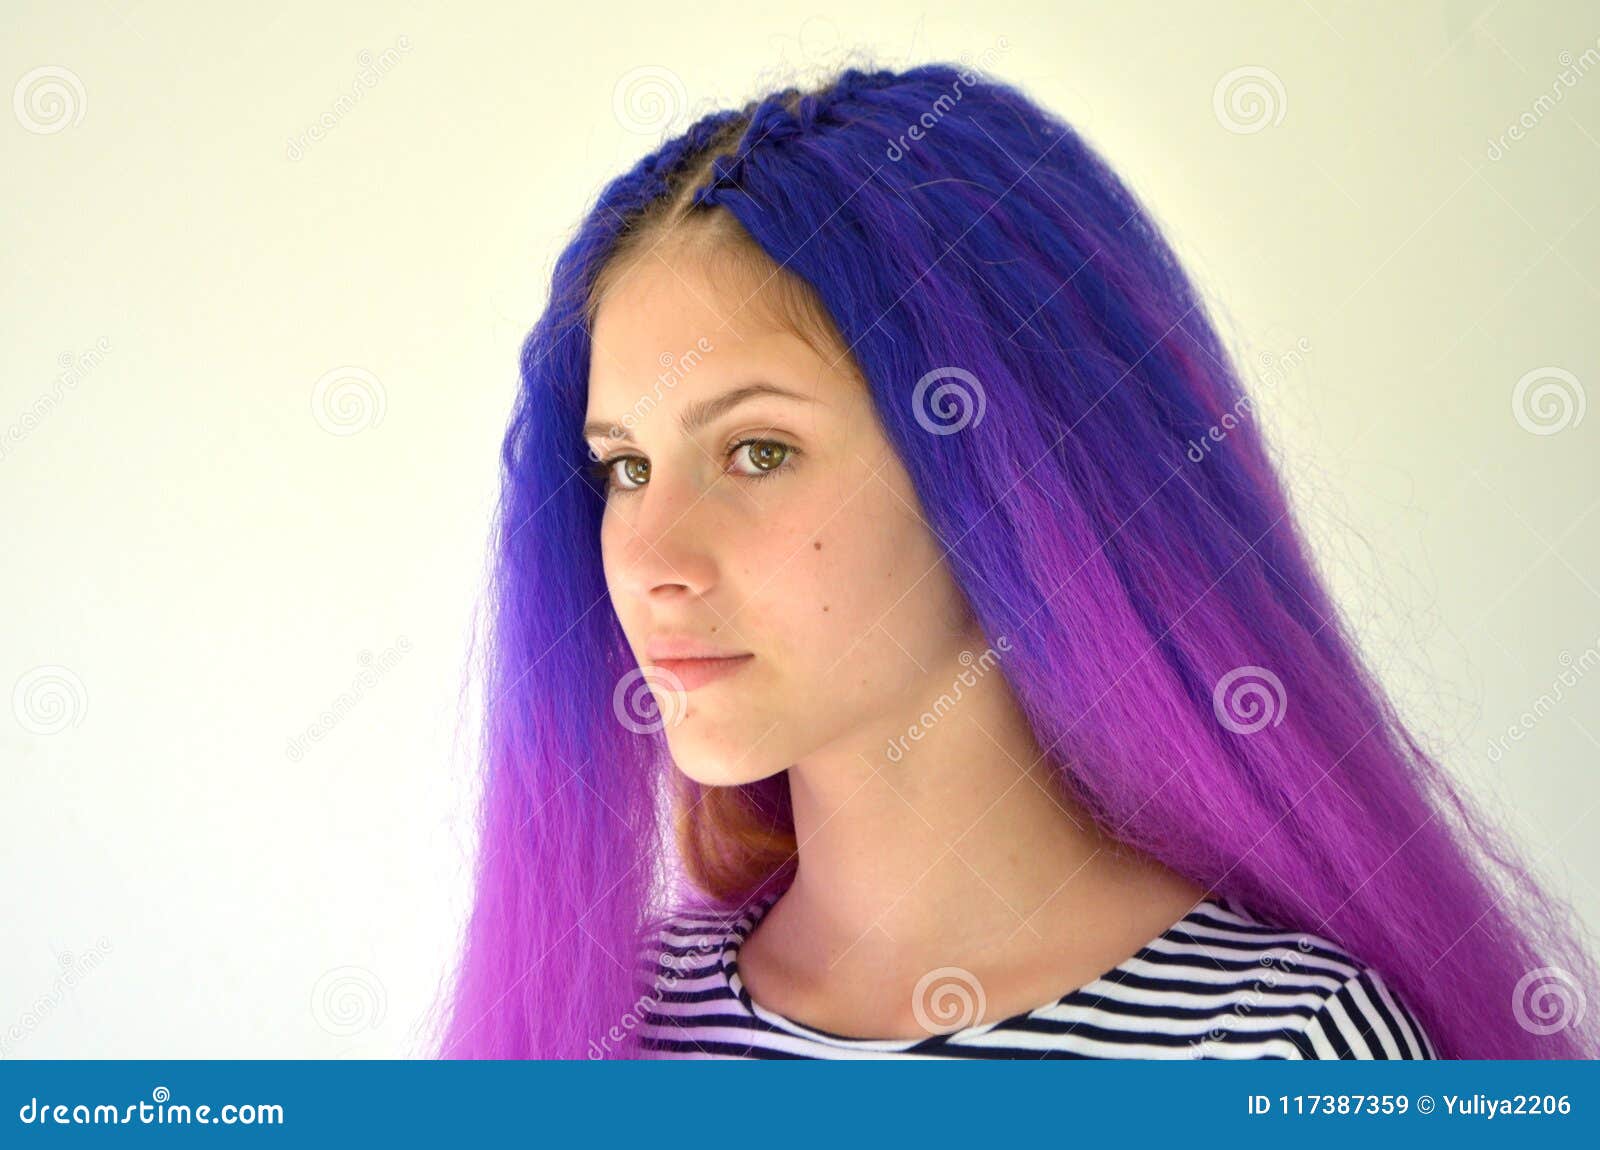 blue purple hair dye uk